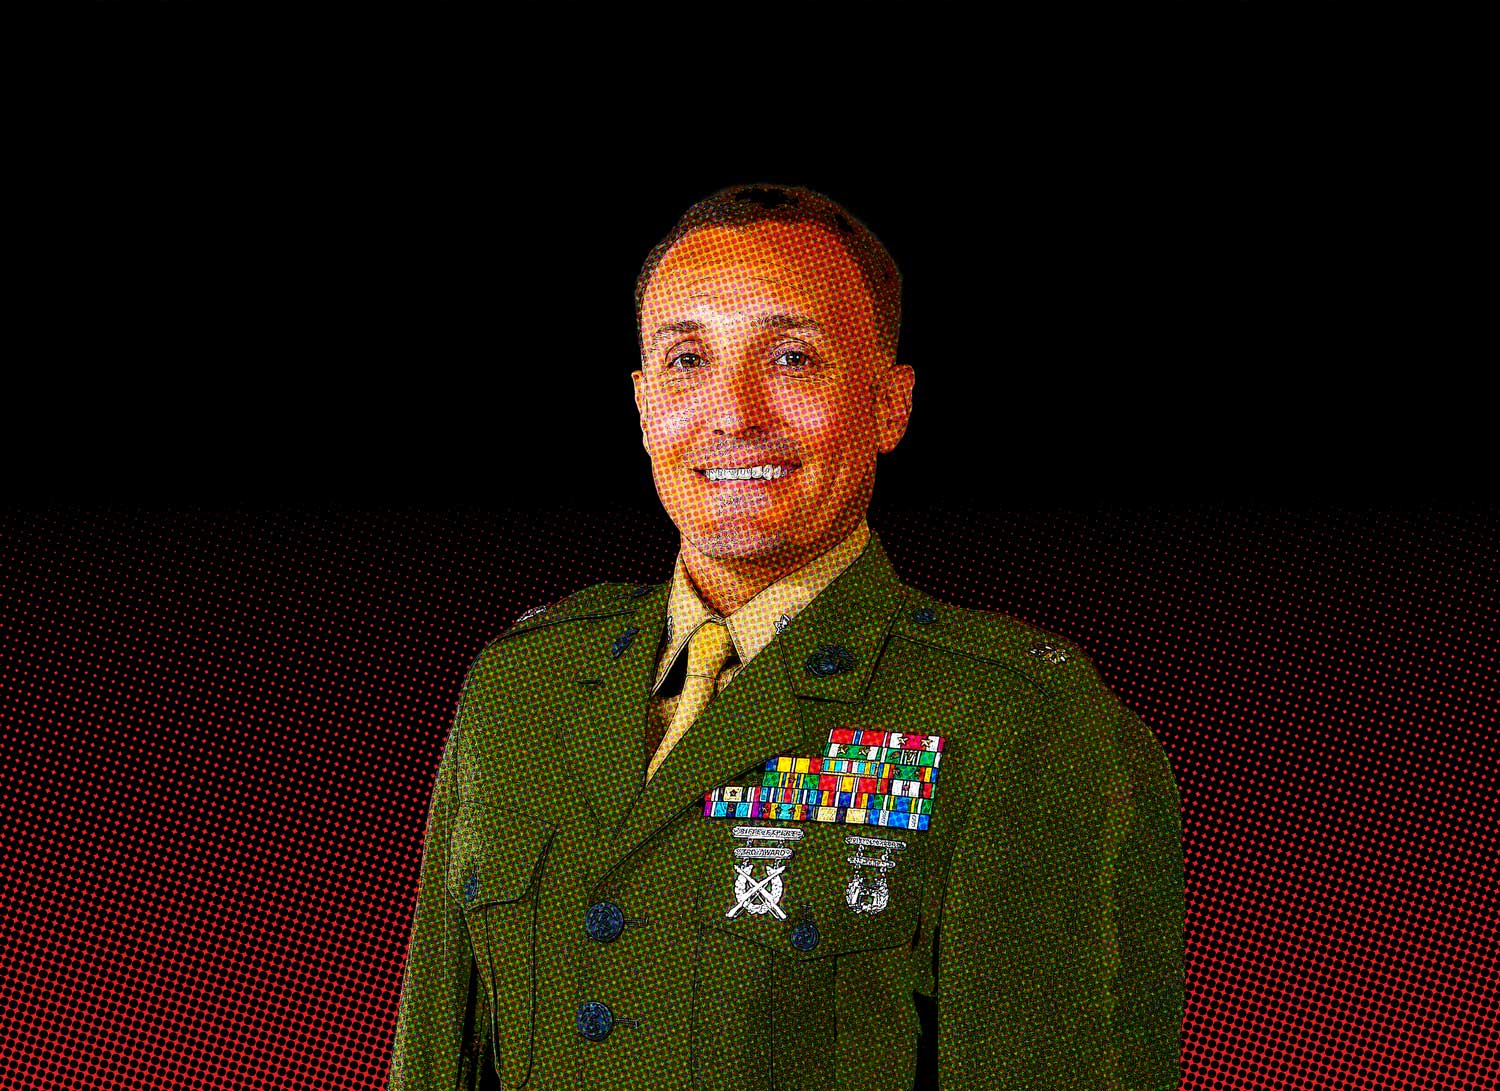 Stuart Scheller, Marine who criticized top brass over Afghan